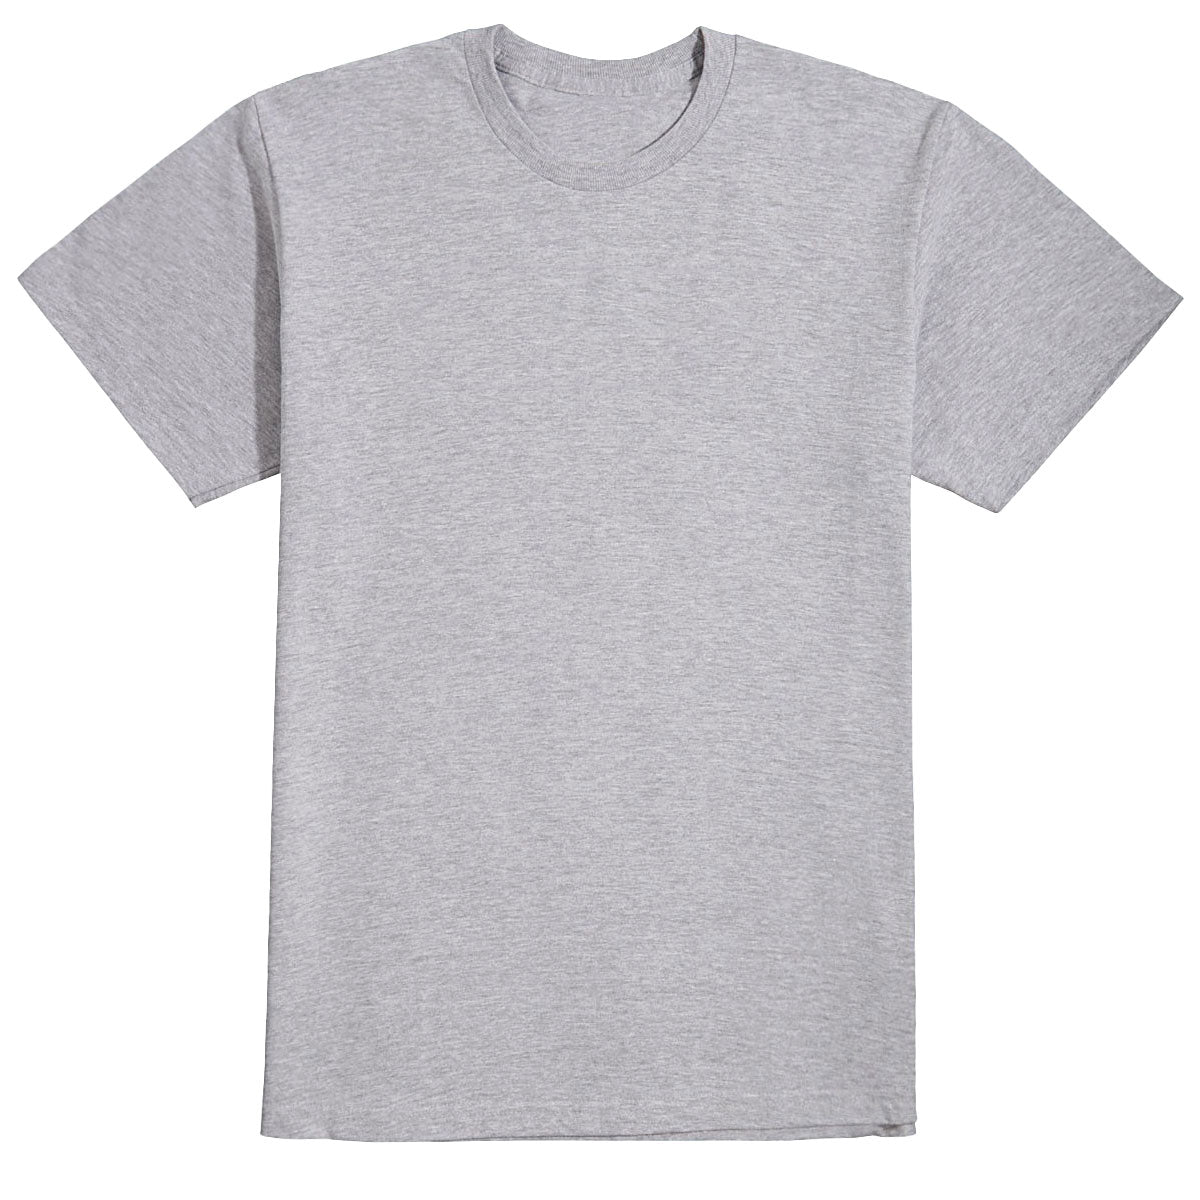 Converse Flash Sheet T-Shirt - Heather Grey - XXL image 1